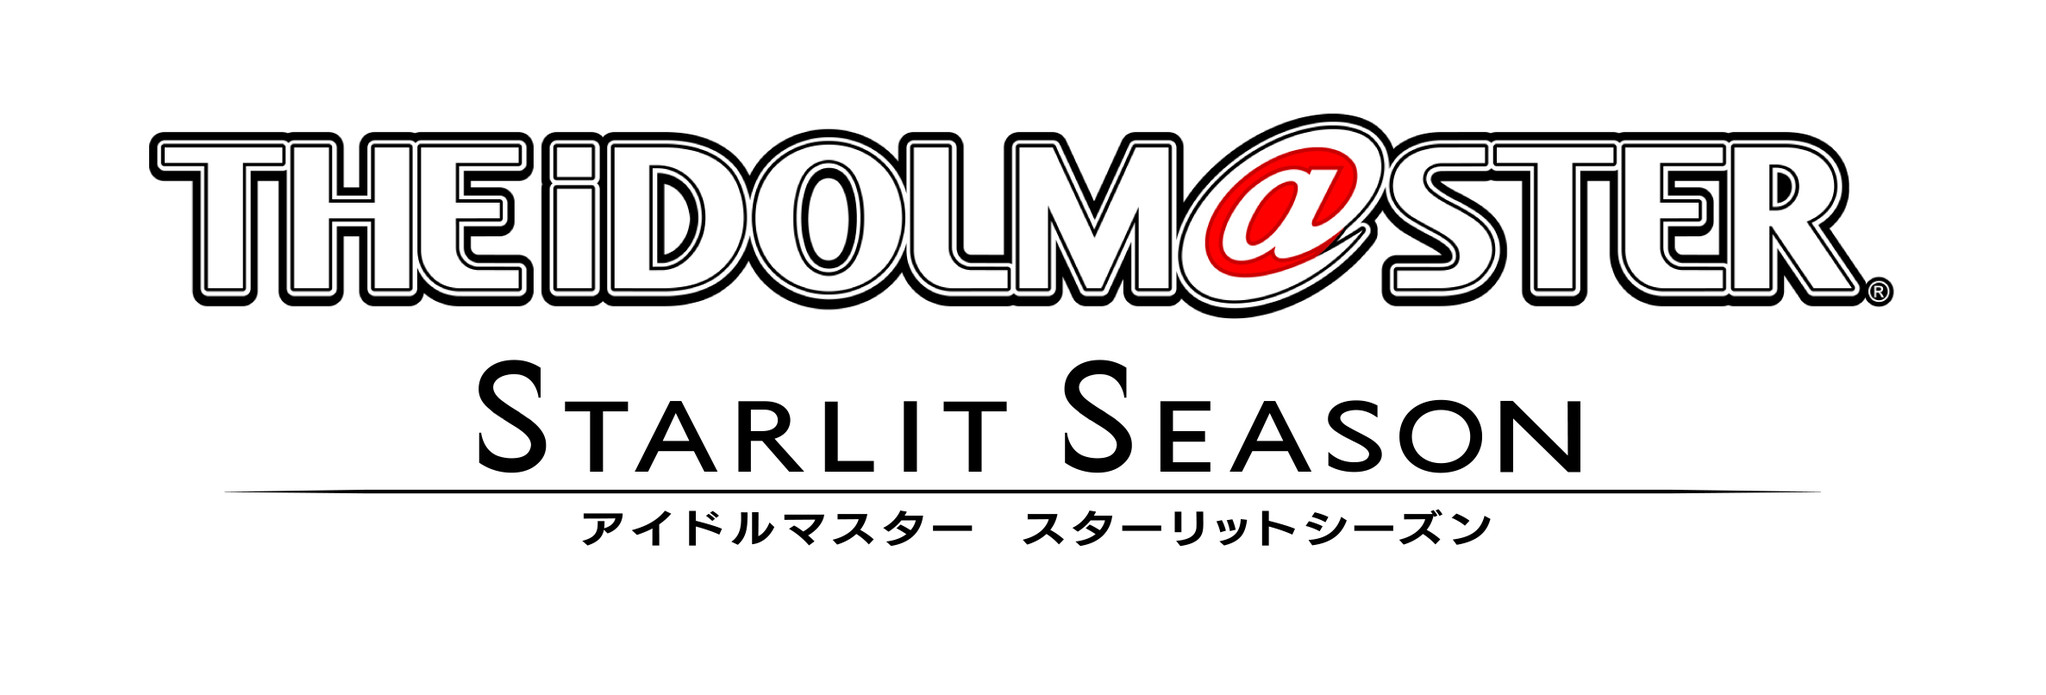 Playstation 4 Steam The Idolm Ster Starlit Season 第3弾情報 新曲 Session Mv公開 株式会社バンダイナムコエンターテインメントのプレスリリース